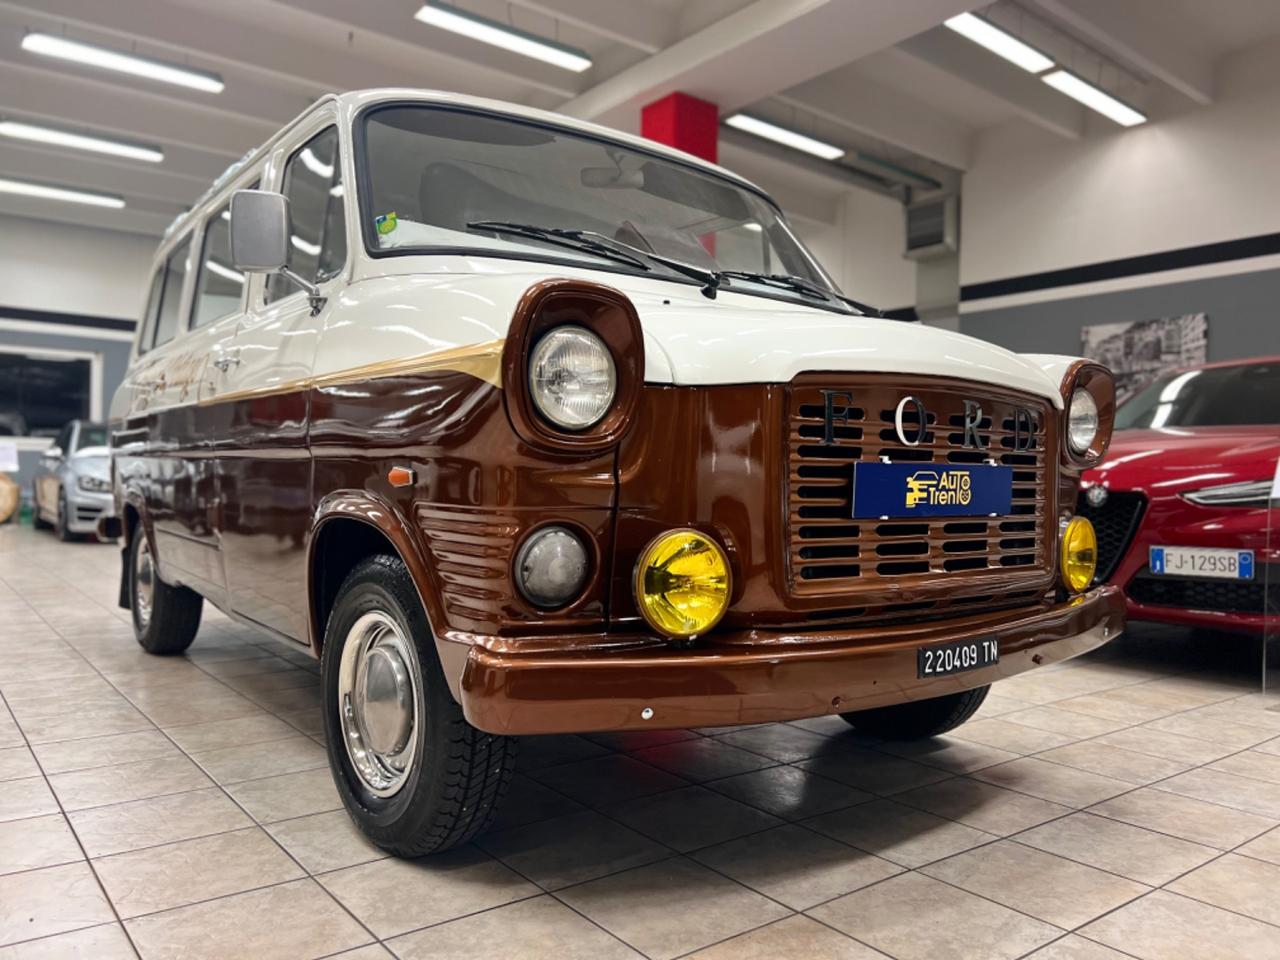 Ford Transit 9 Posti Appena restaurato UNICO IN ITALIA